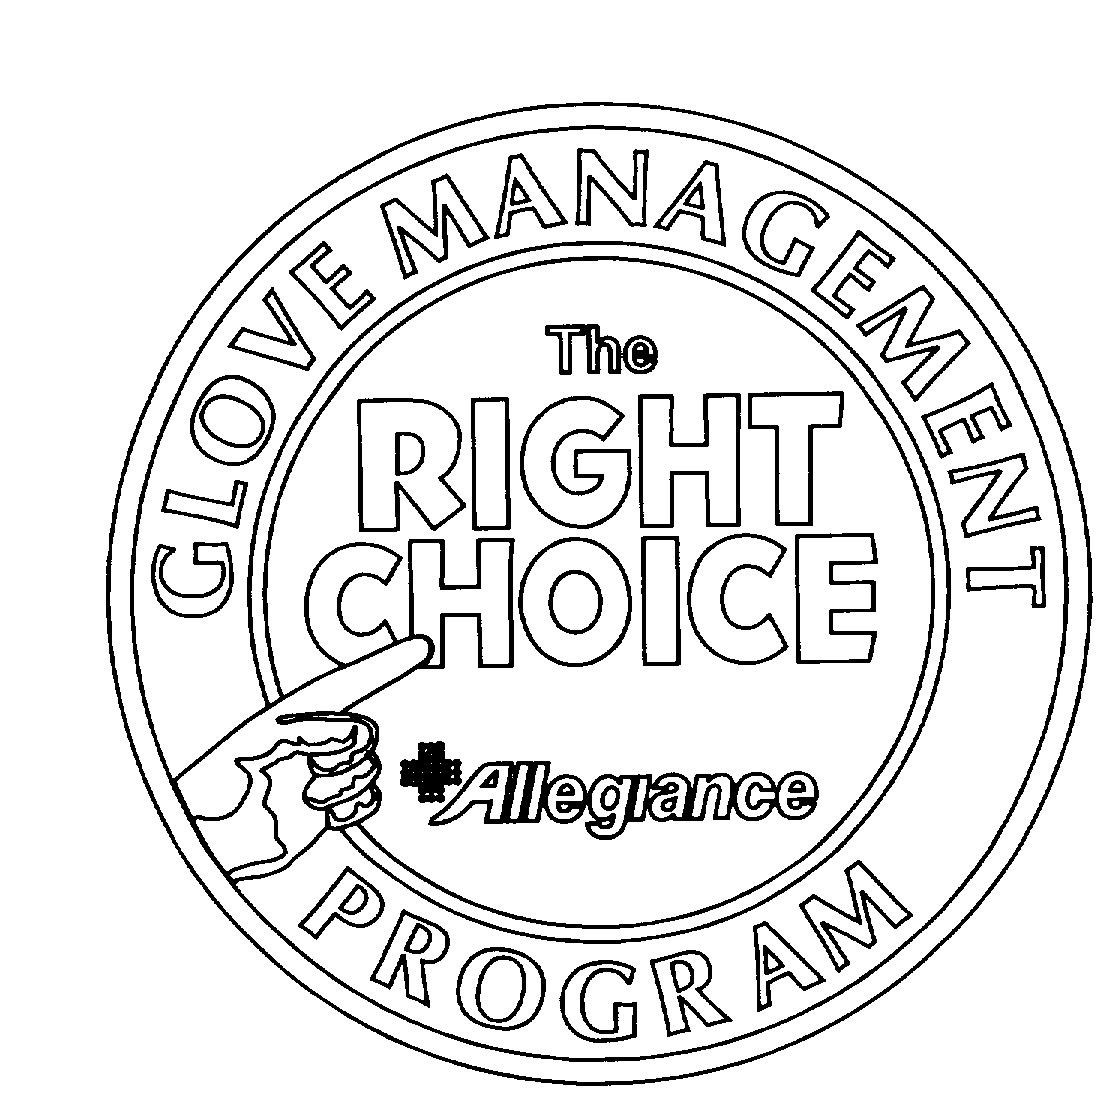  GLOVE MANAGEMENT THE RIGHT CHOICE + ALLEGIANCE PROGRAM